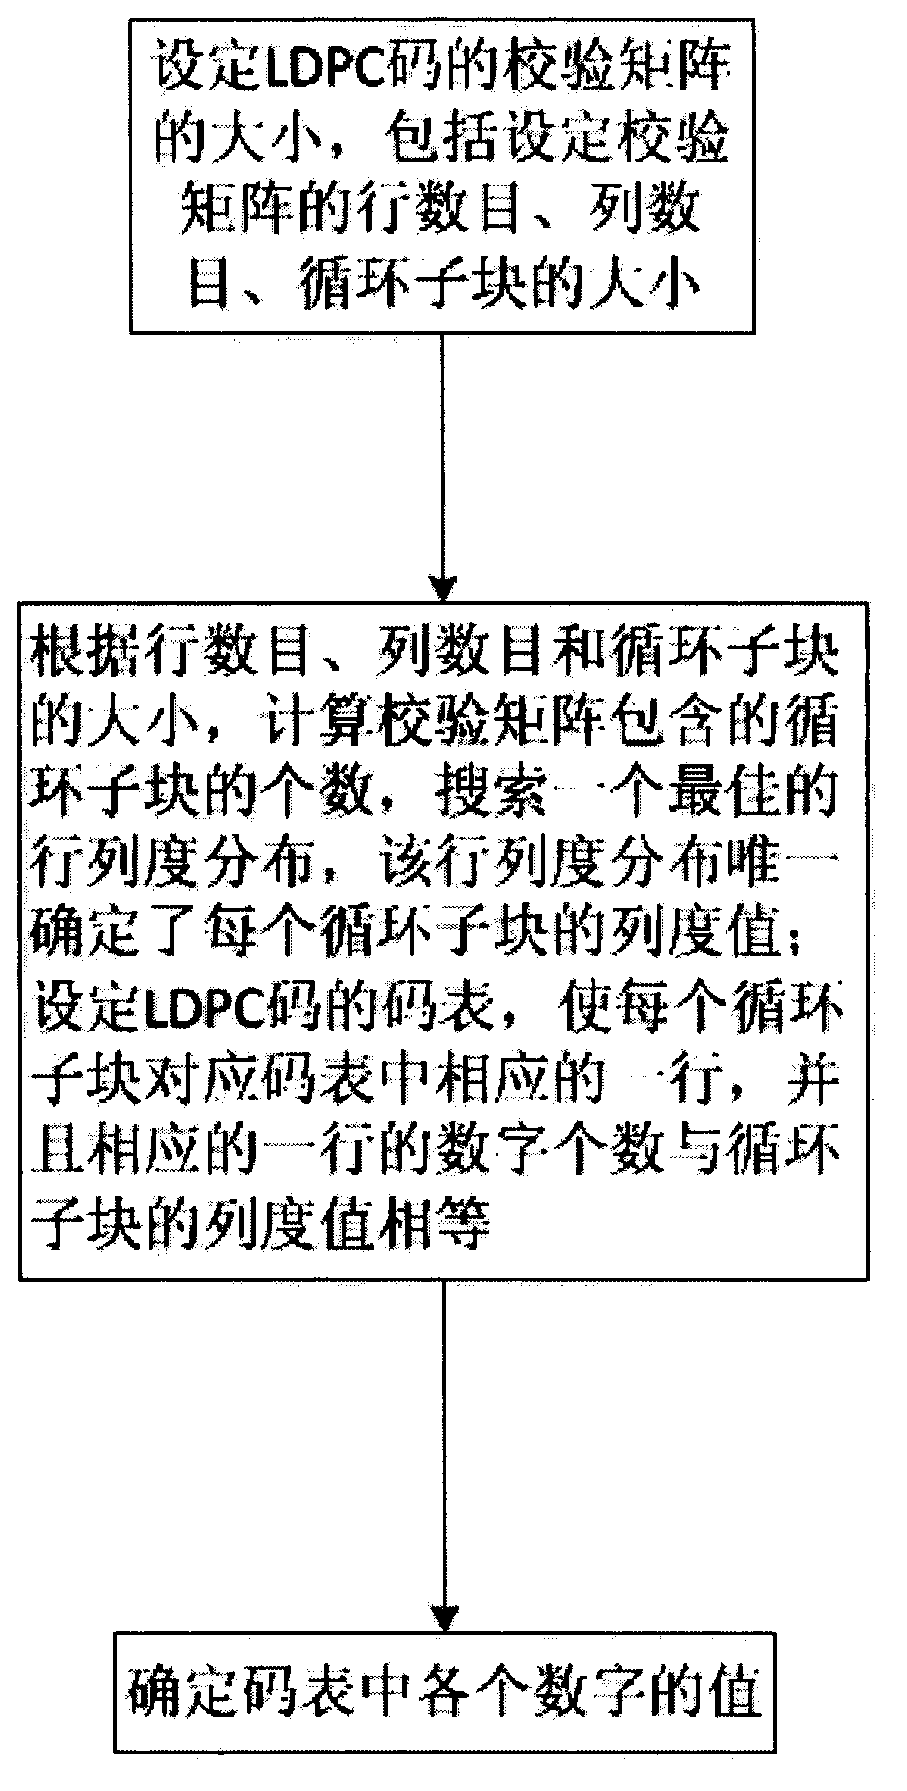 Method for constructing LDPC codes